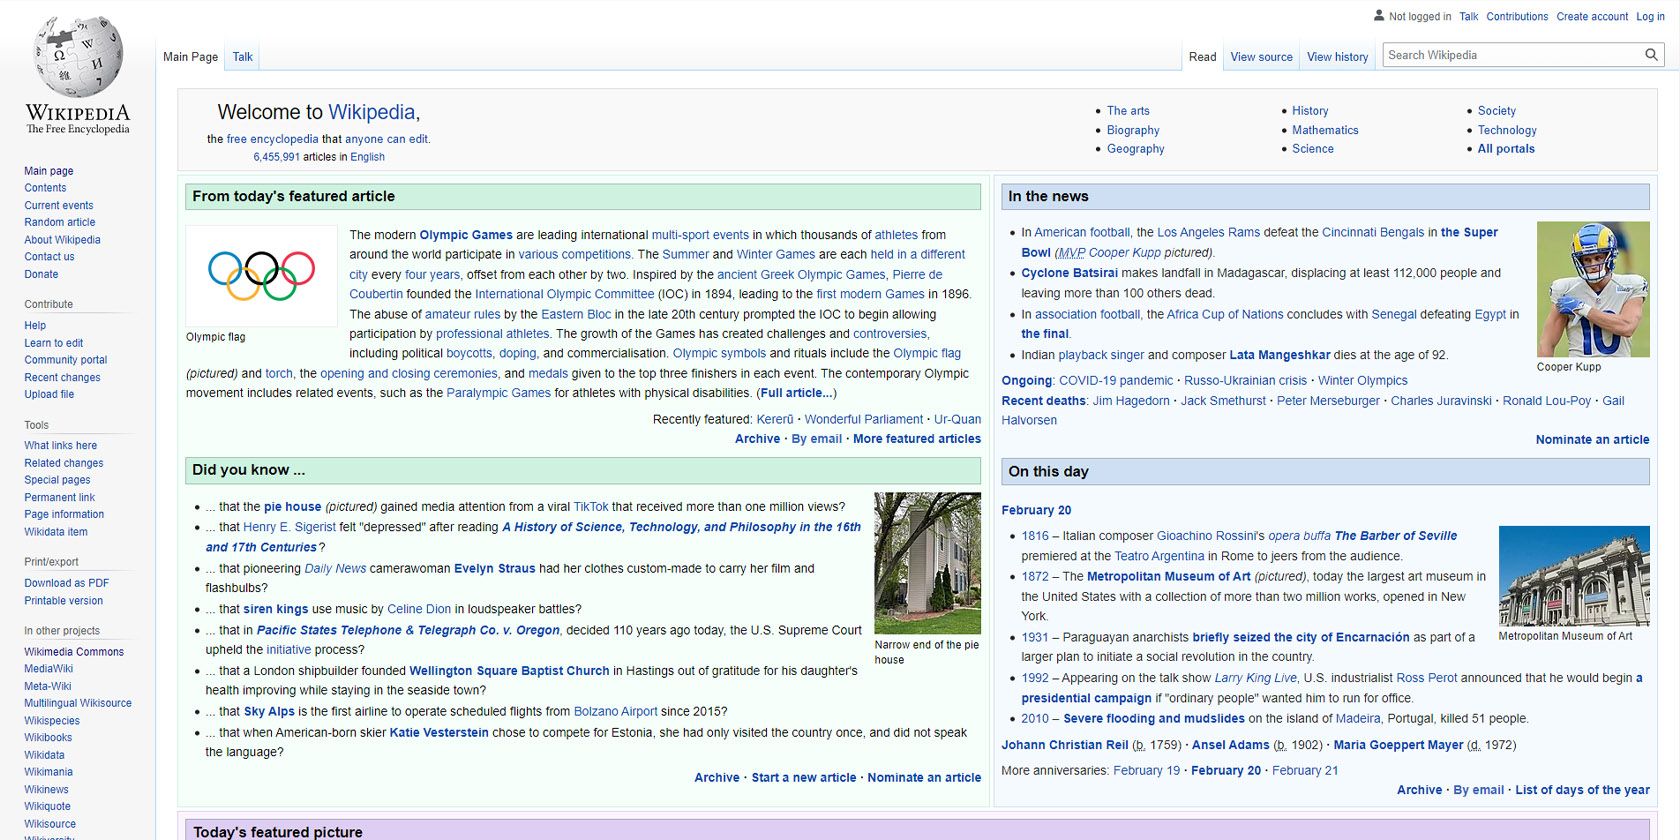 Wikipedia homepage for 20 Feb 2022